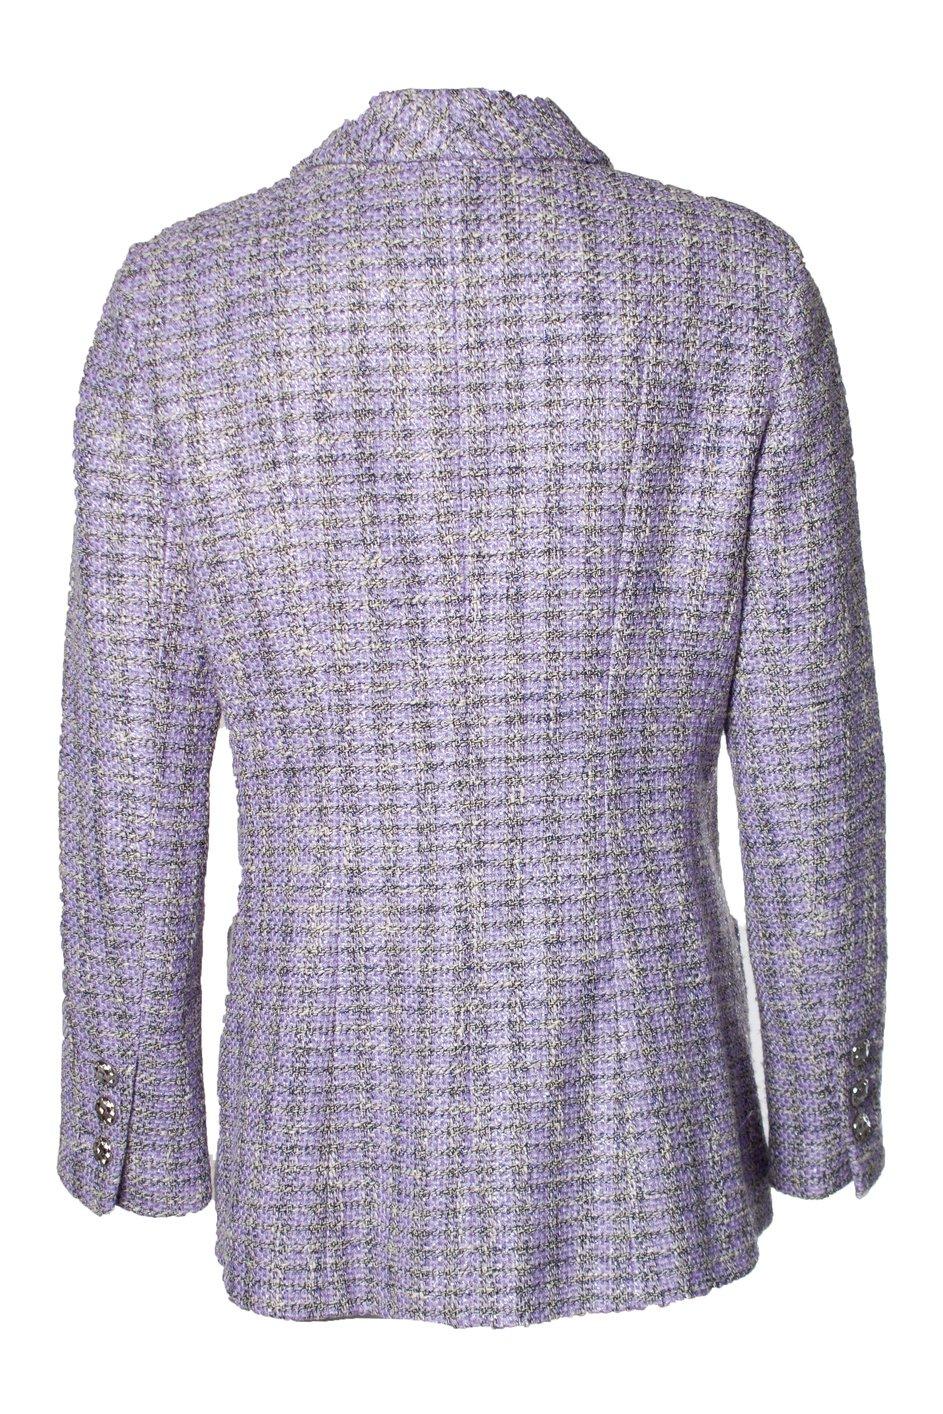 Chanel Airport Runway Lavender Tweed Jacket For Sale 4